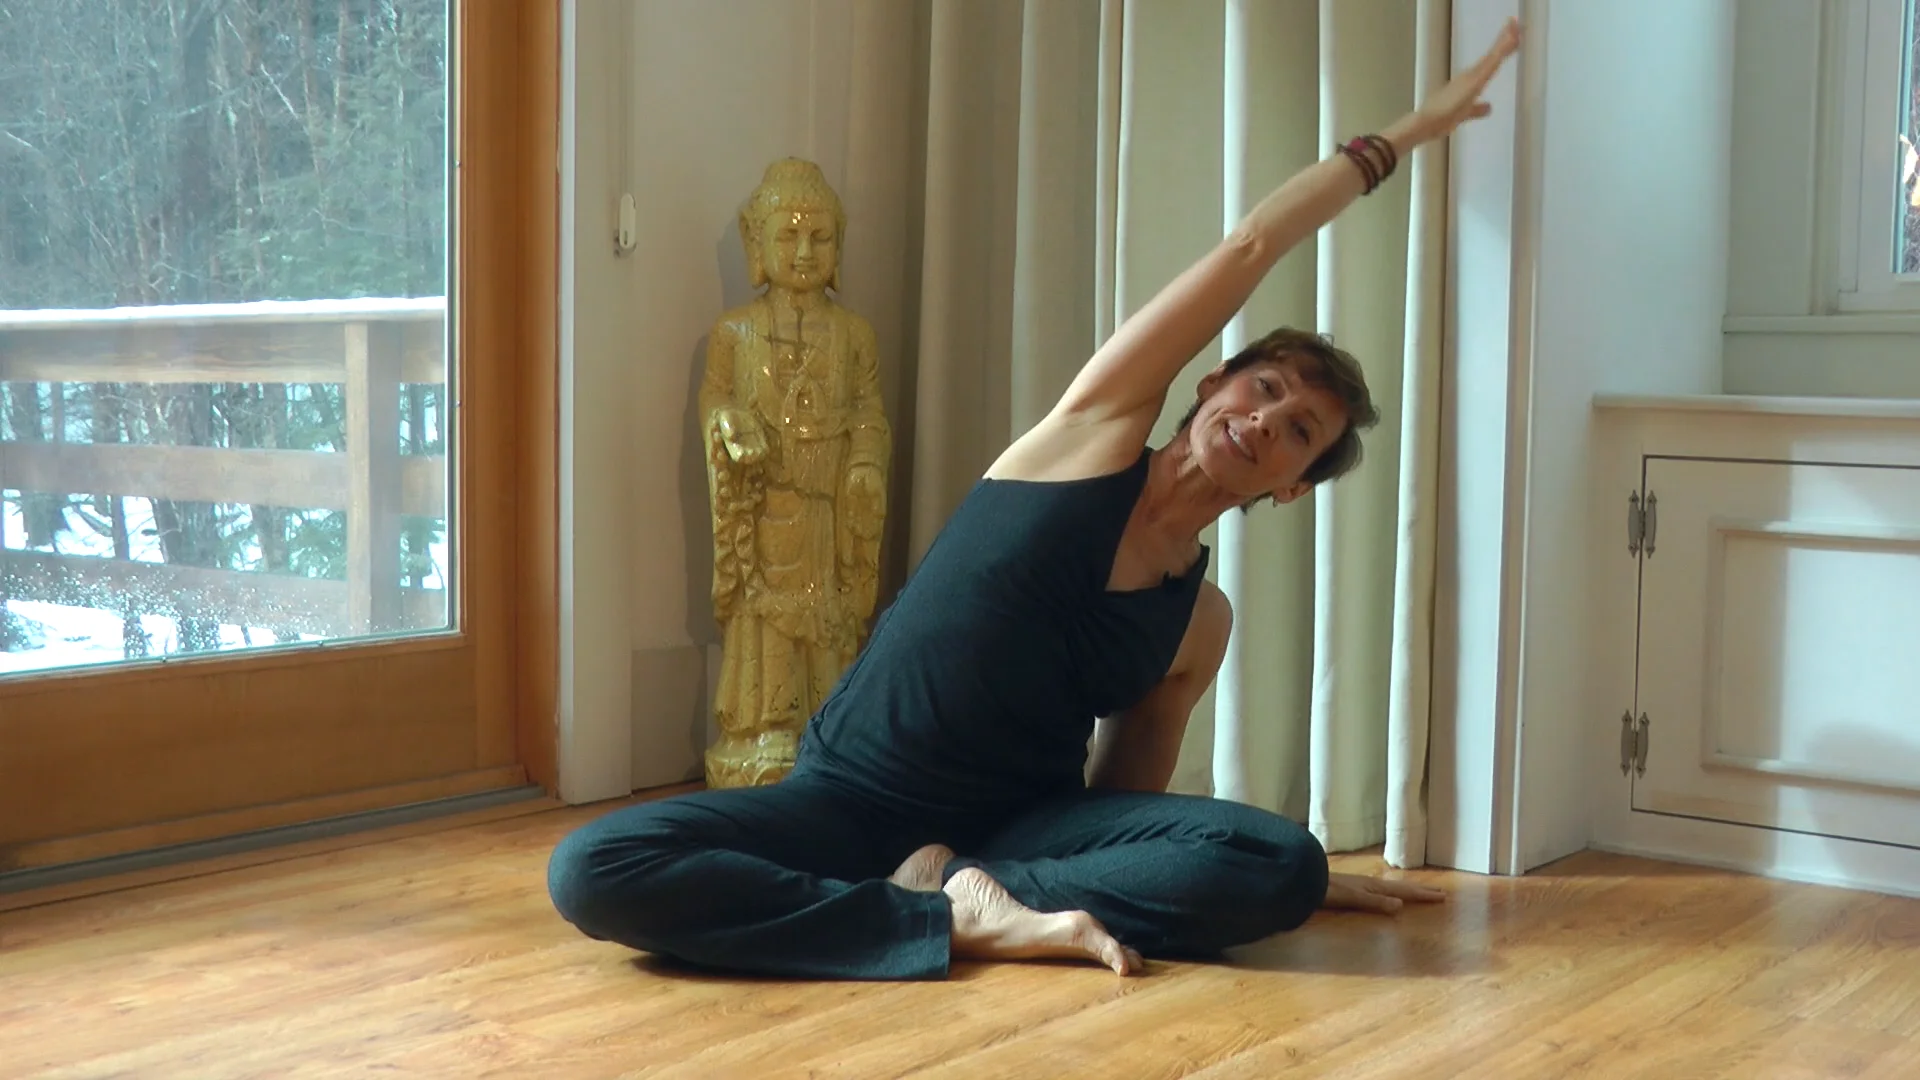 Yoga for Vitality with Jurian Hughes on Vimeo